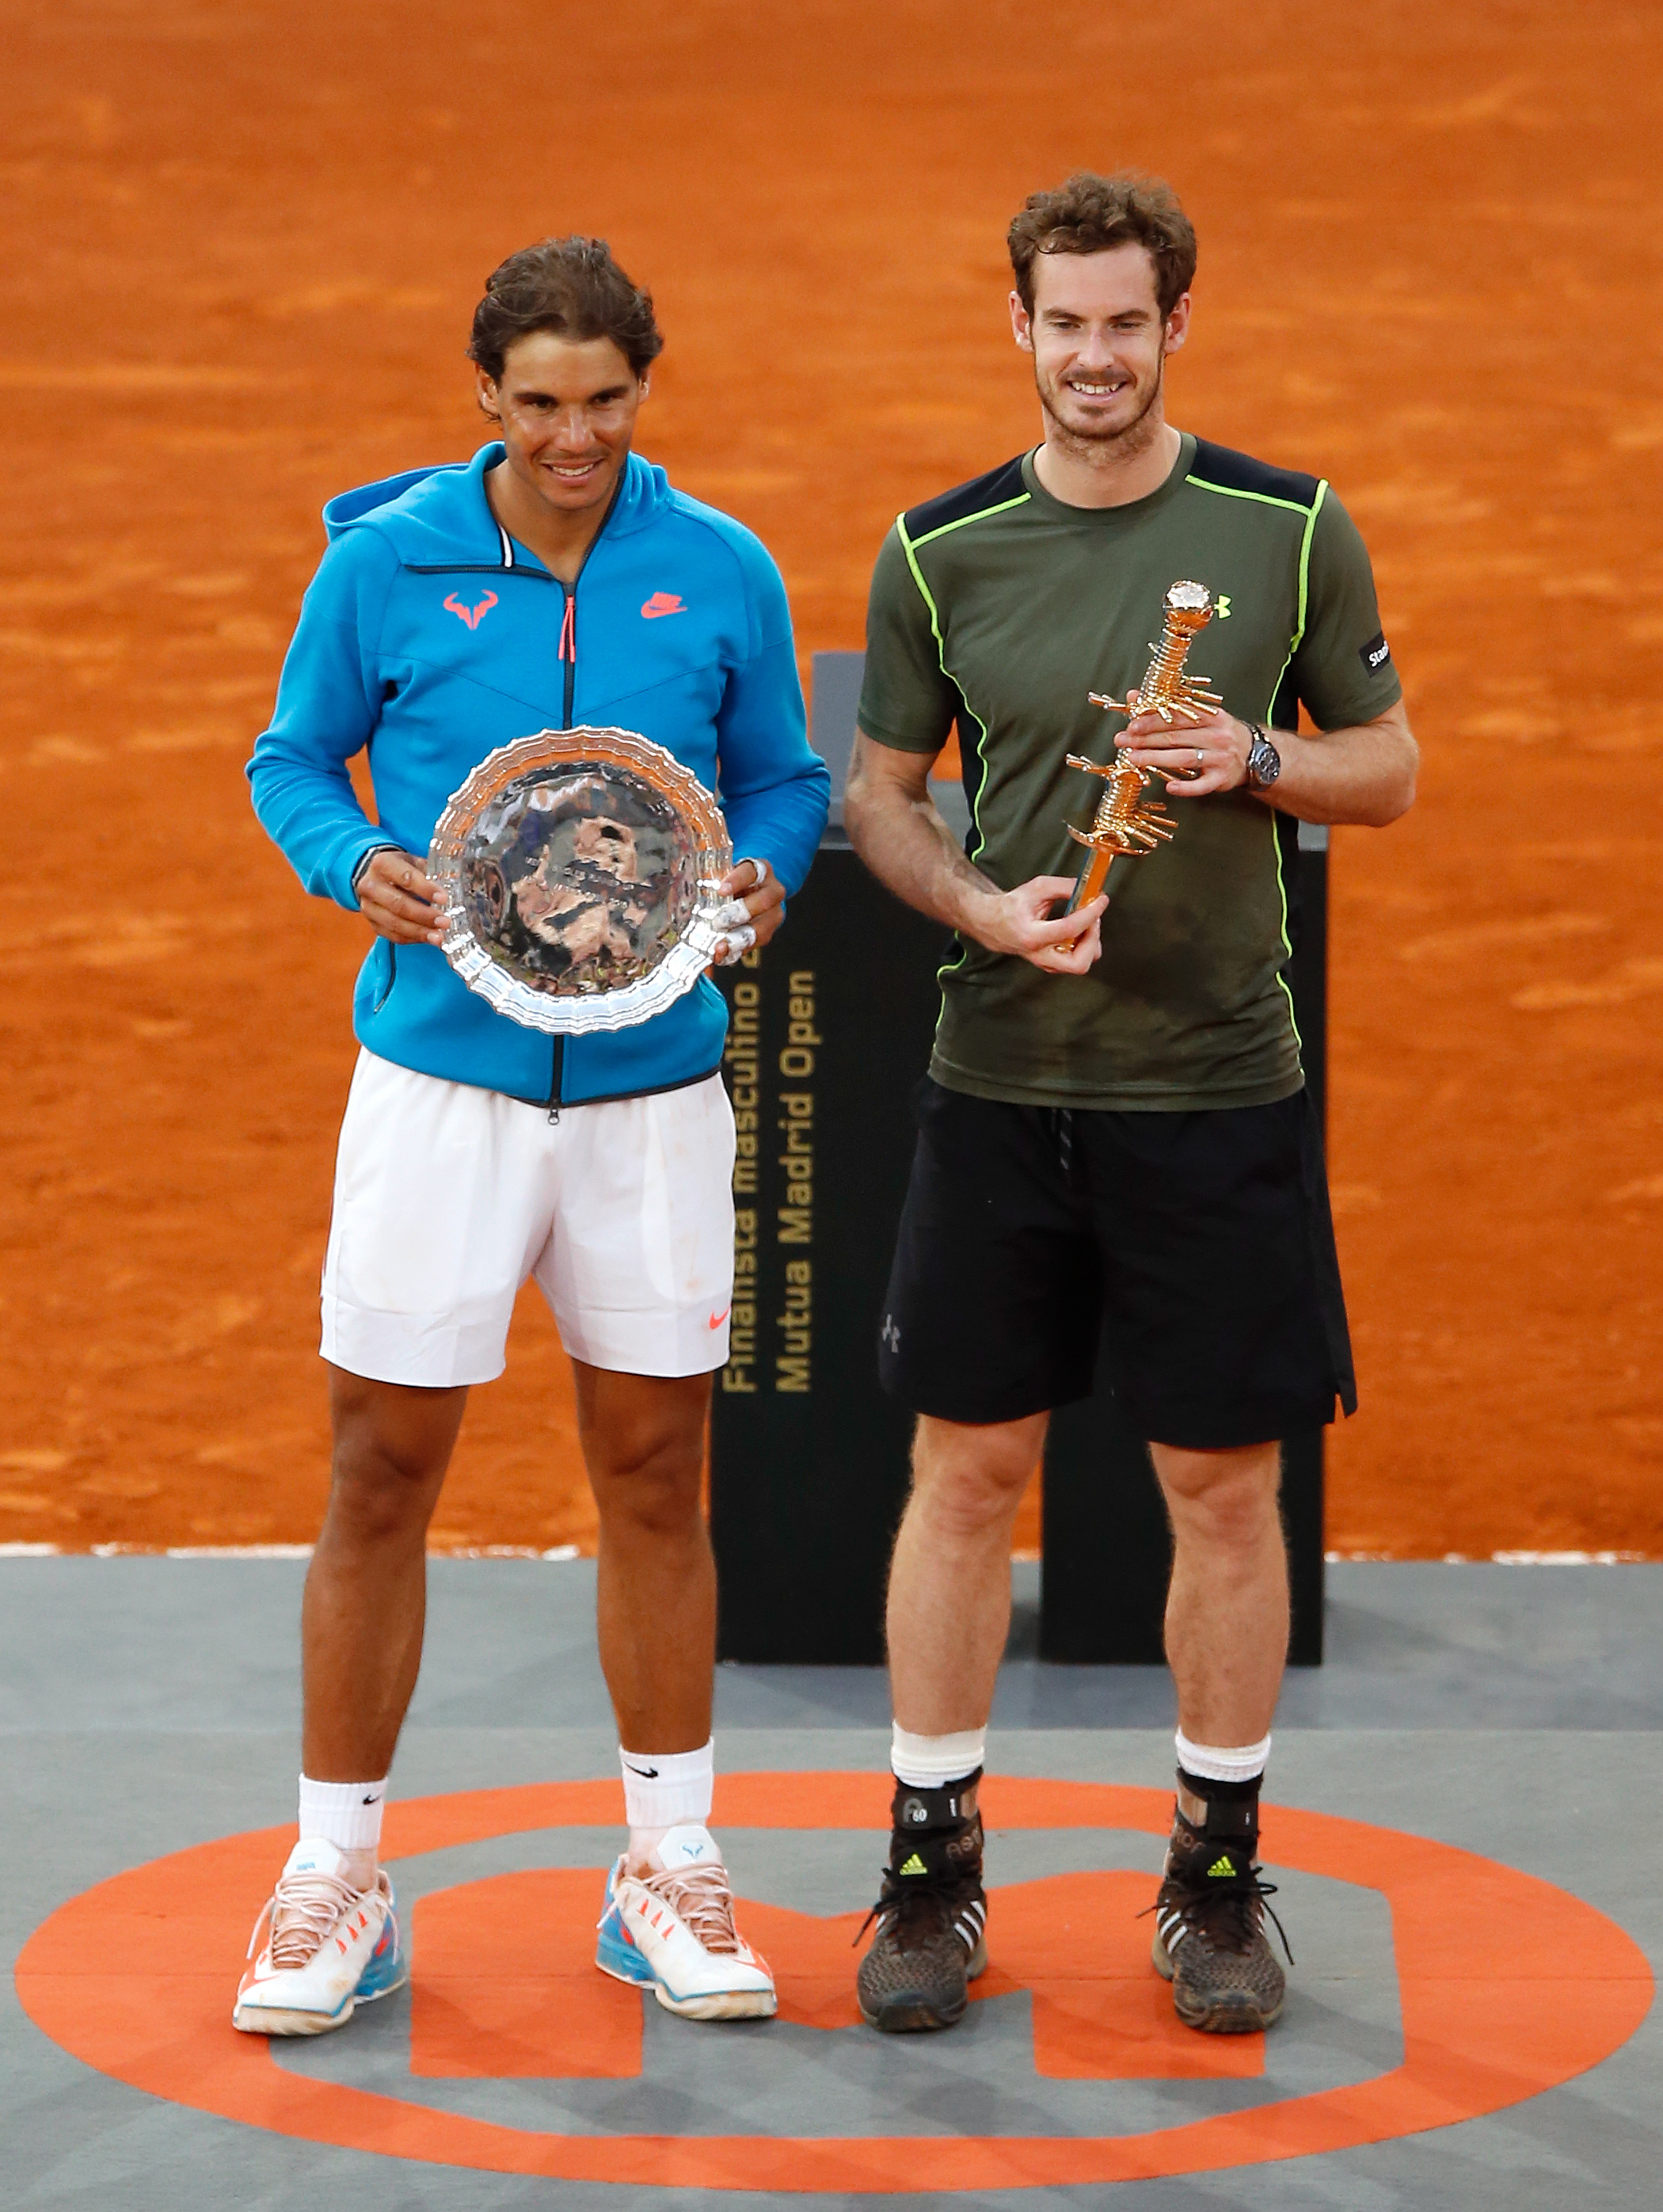 Rafael Nadal loses Madrid Open final to Andy Murray [PHOTOS] – Rafael Nadal Fans2100 x 2793